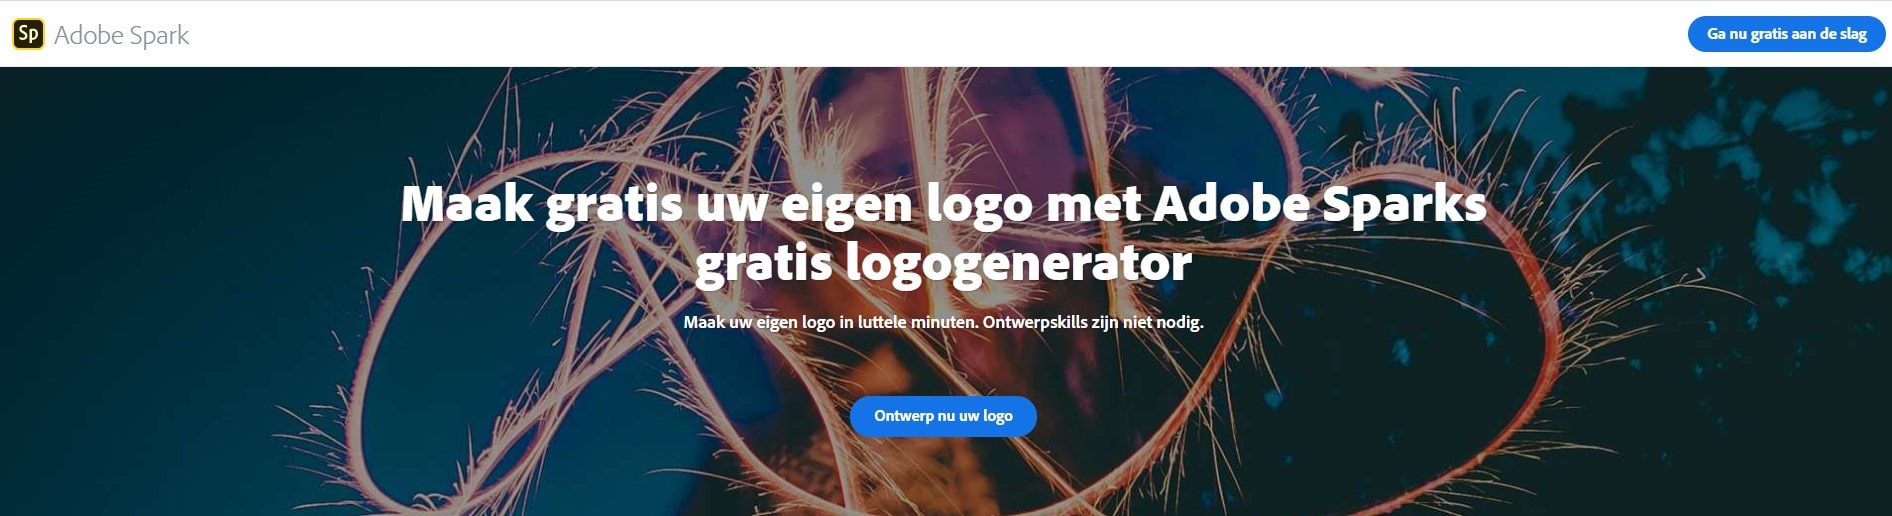 Adobe Spark_overview_nl